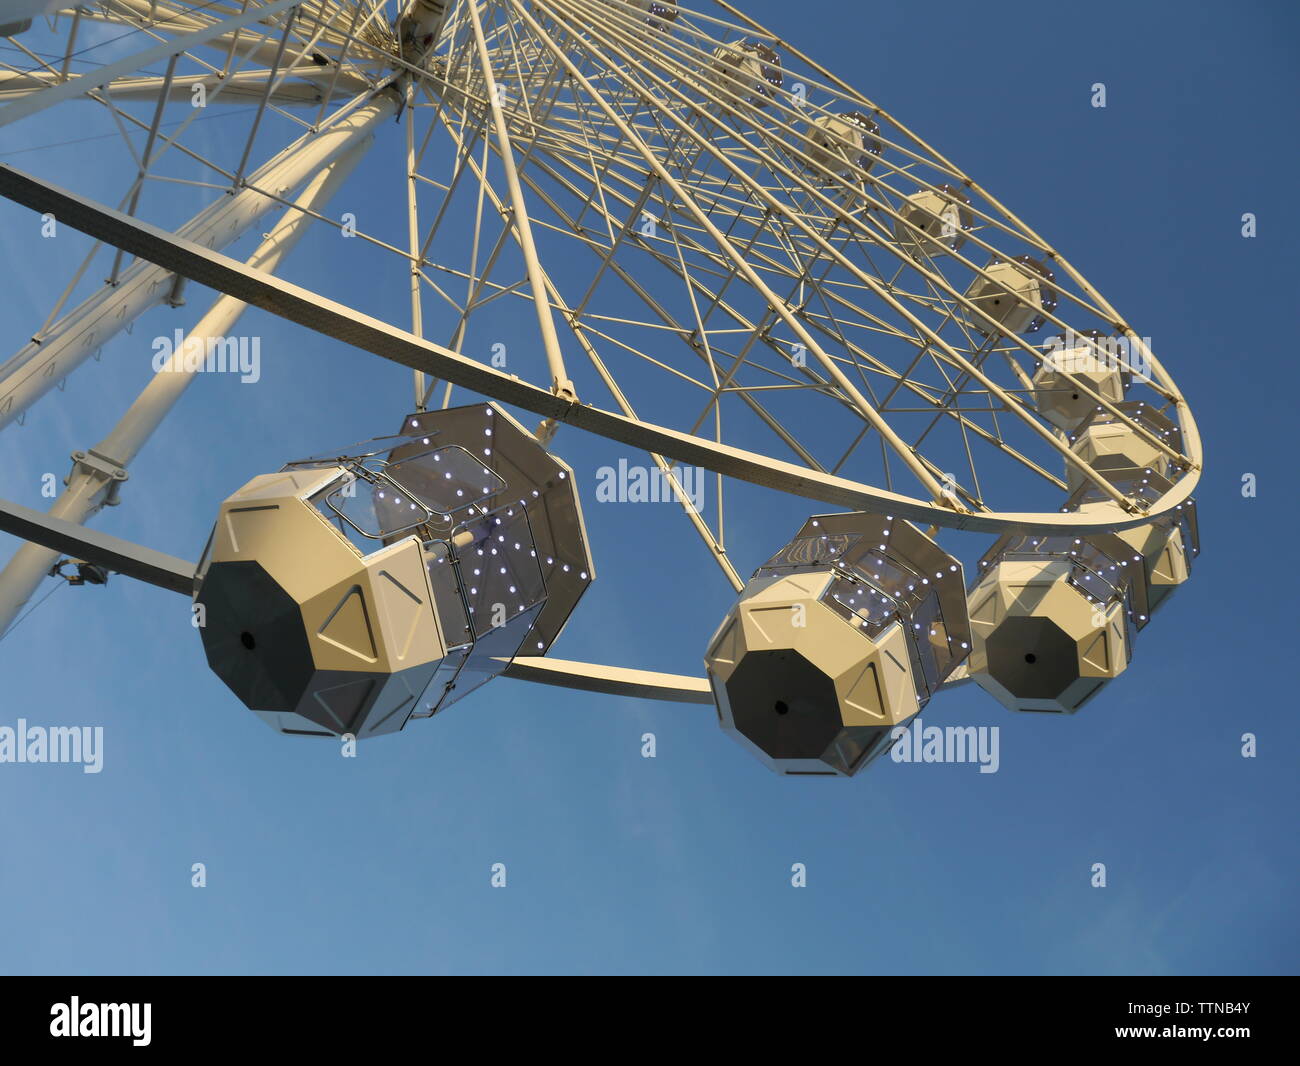 Newport, Isle of Wight. June 16 2019: Ferris Wheel at Seaclose Park, Isle of Wight Festival of Music. Credit: Katherine Da Silva Stock Photo